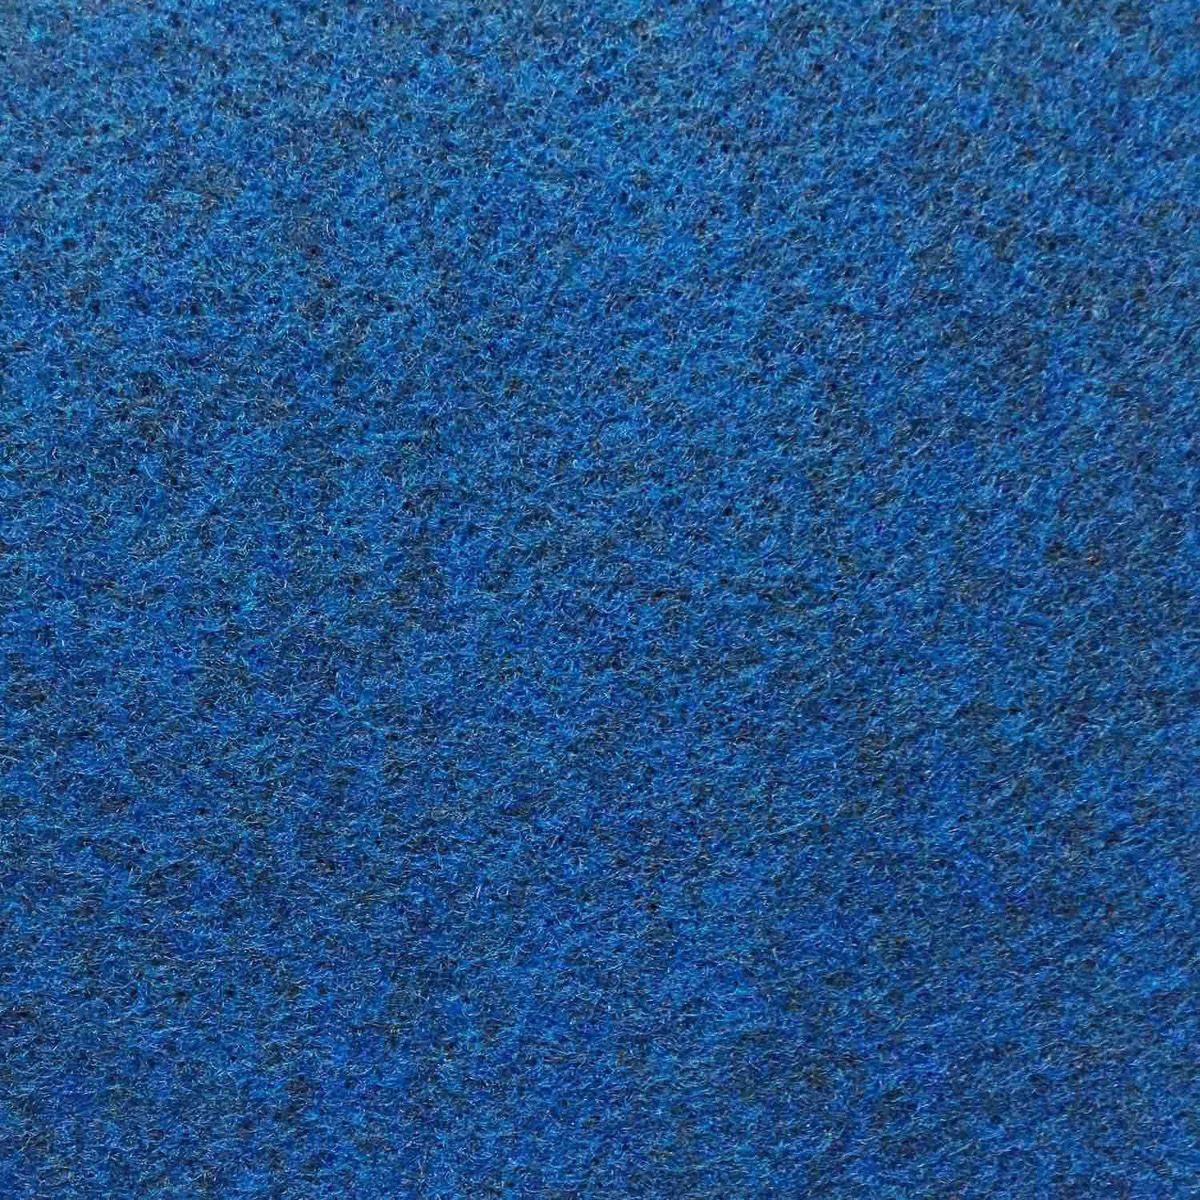 Heckmondwike Iron Duke Carpet Blue